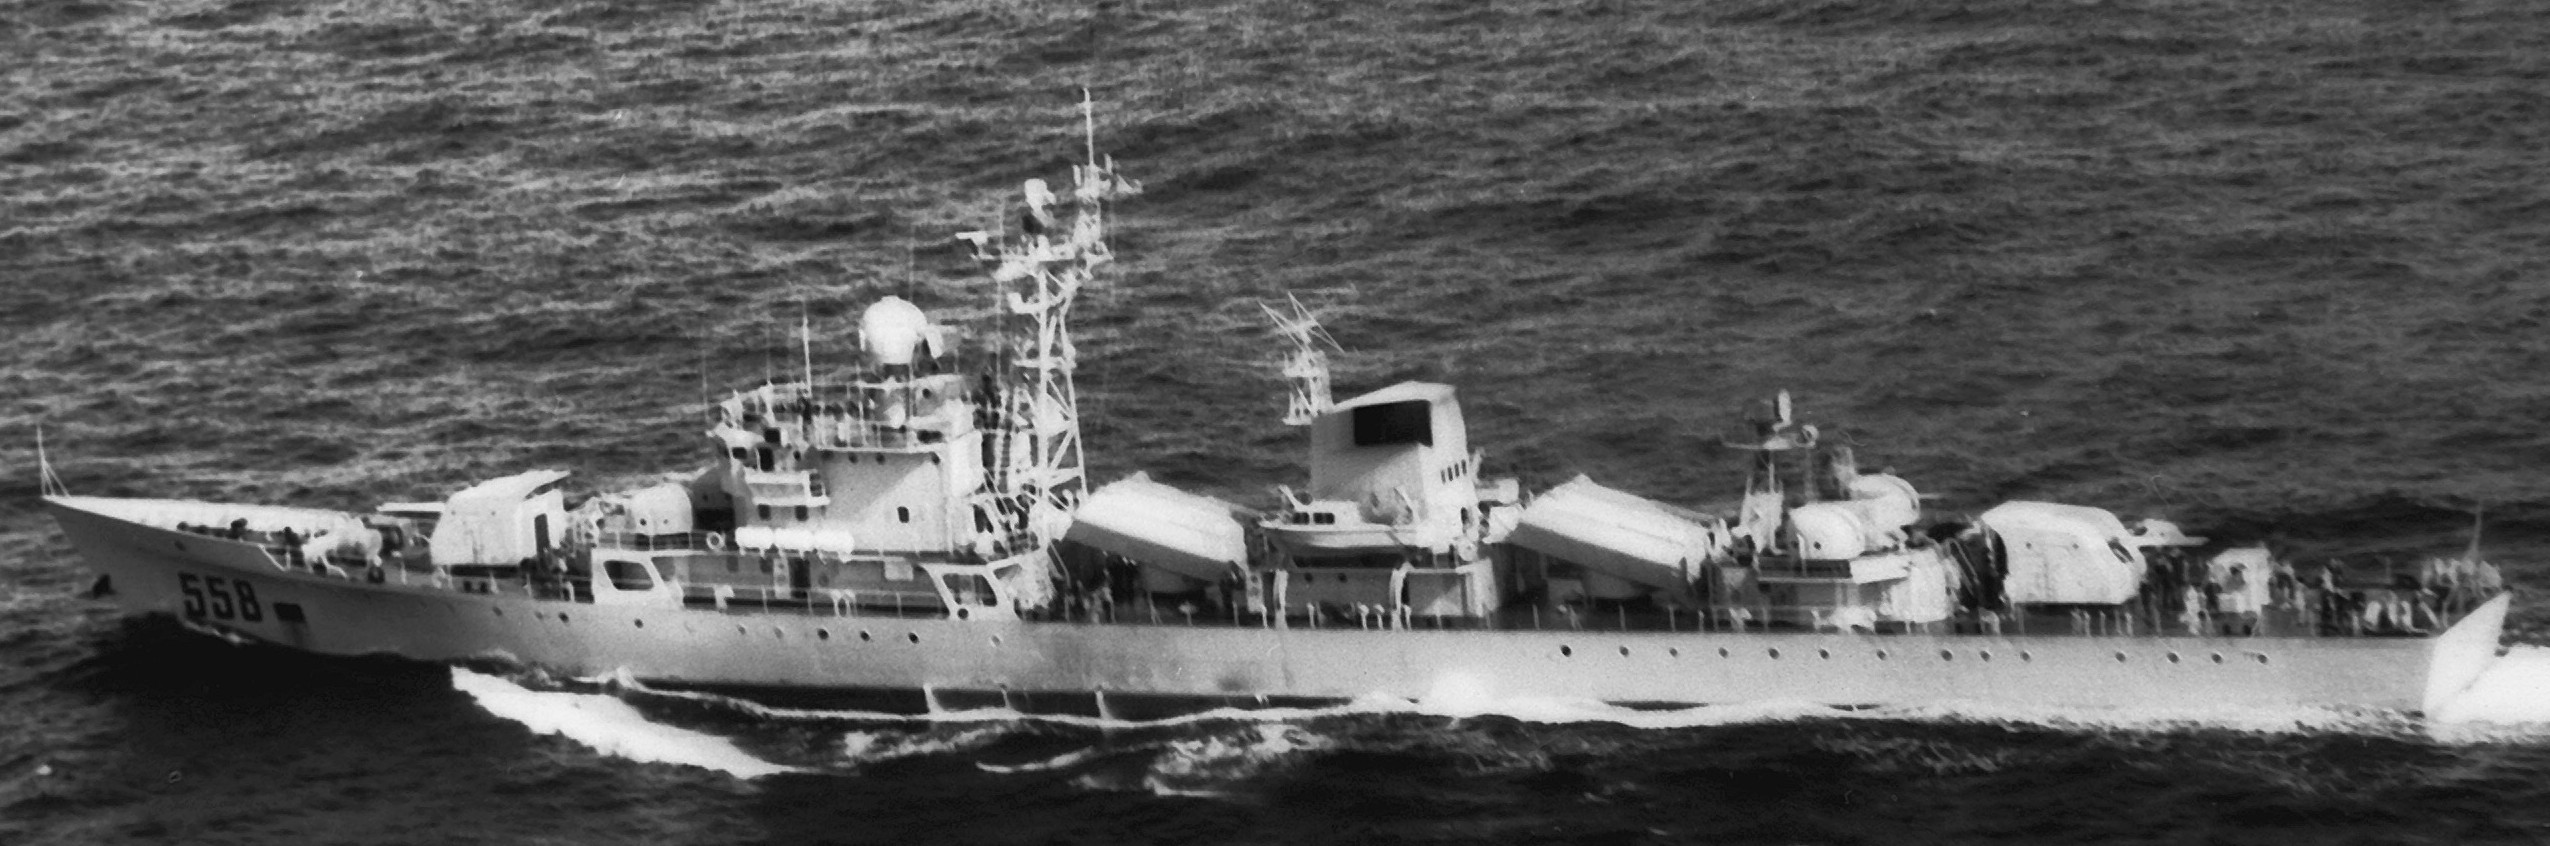 ff-558 plans beihai type 053h1g jianghu v class frigate china people's liberation army navy 02